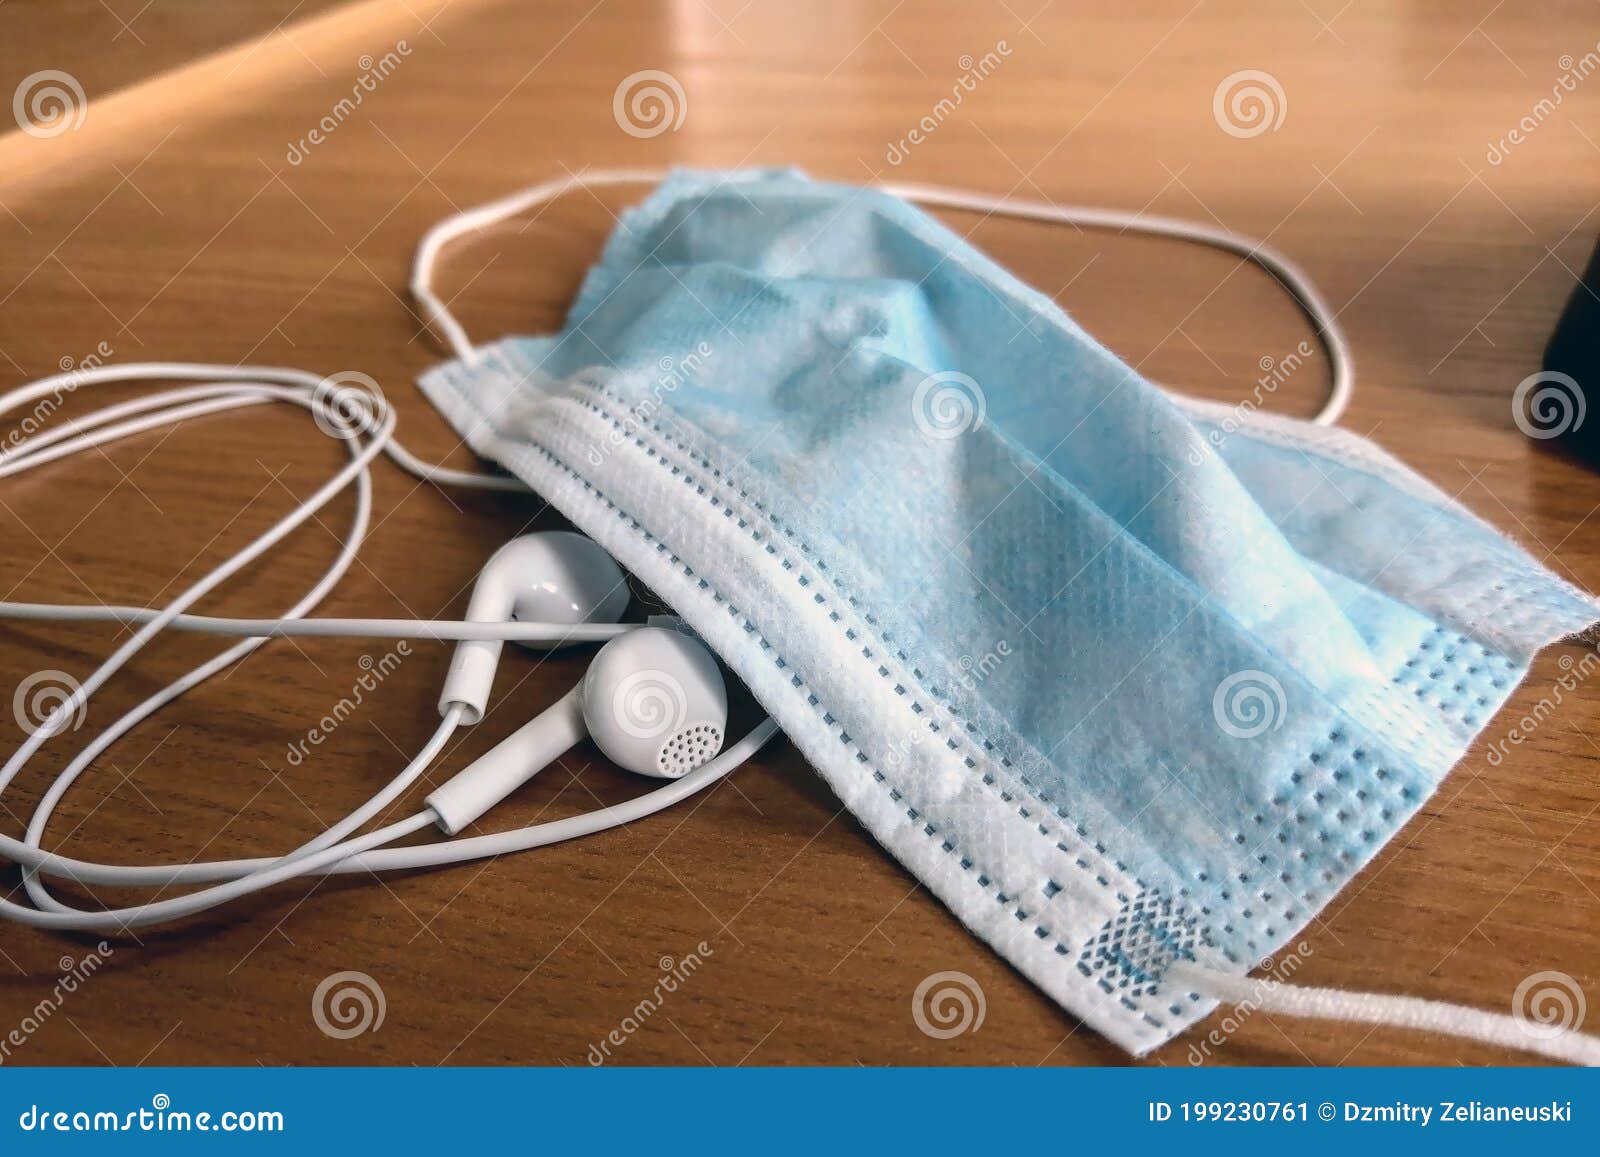 medical mask and headphones on the desktop. rest from work. prevention of coronavirus